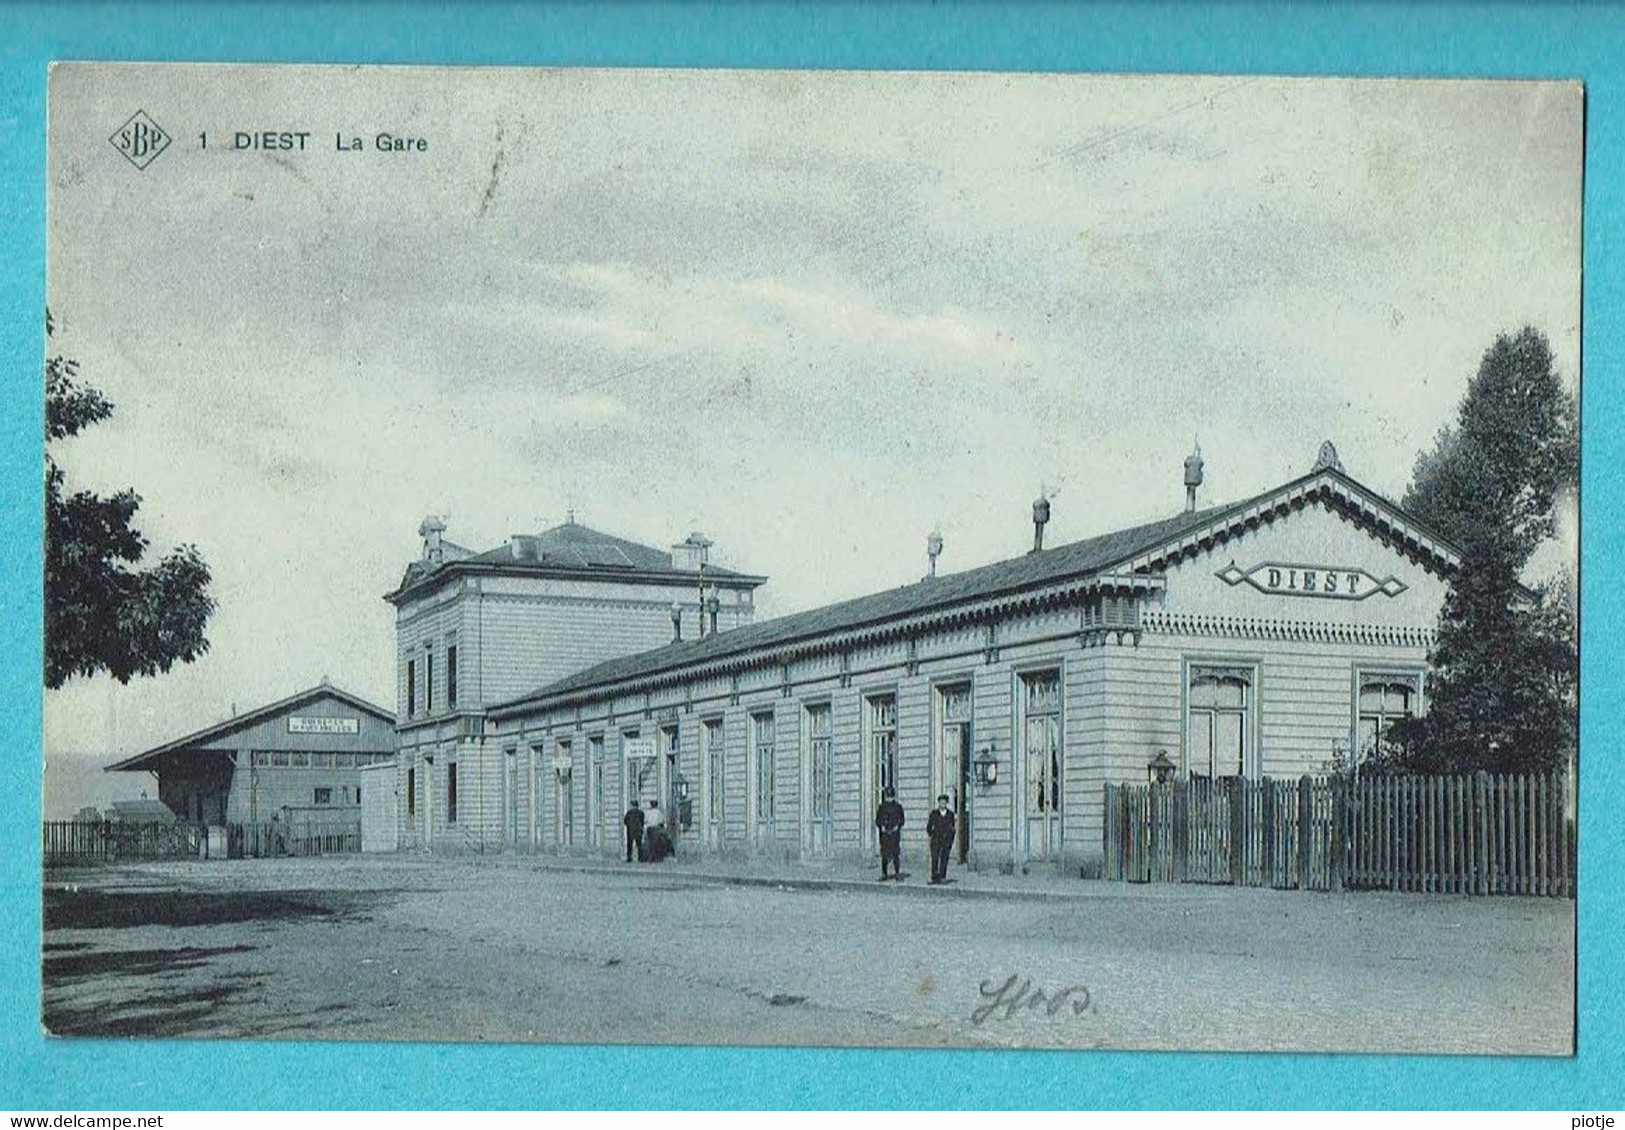 * Diest (Vlaams Brabant) * (SBP, Nr 1) La Gare, Railway Station, Bahnhof, Statie, Zeldzaam, Unique, TOP, Prachtkaart - Diest